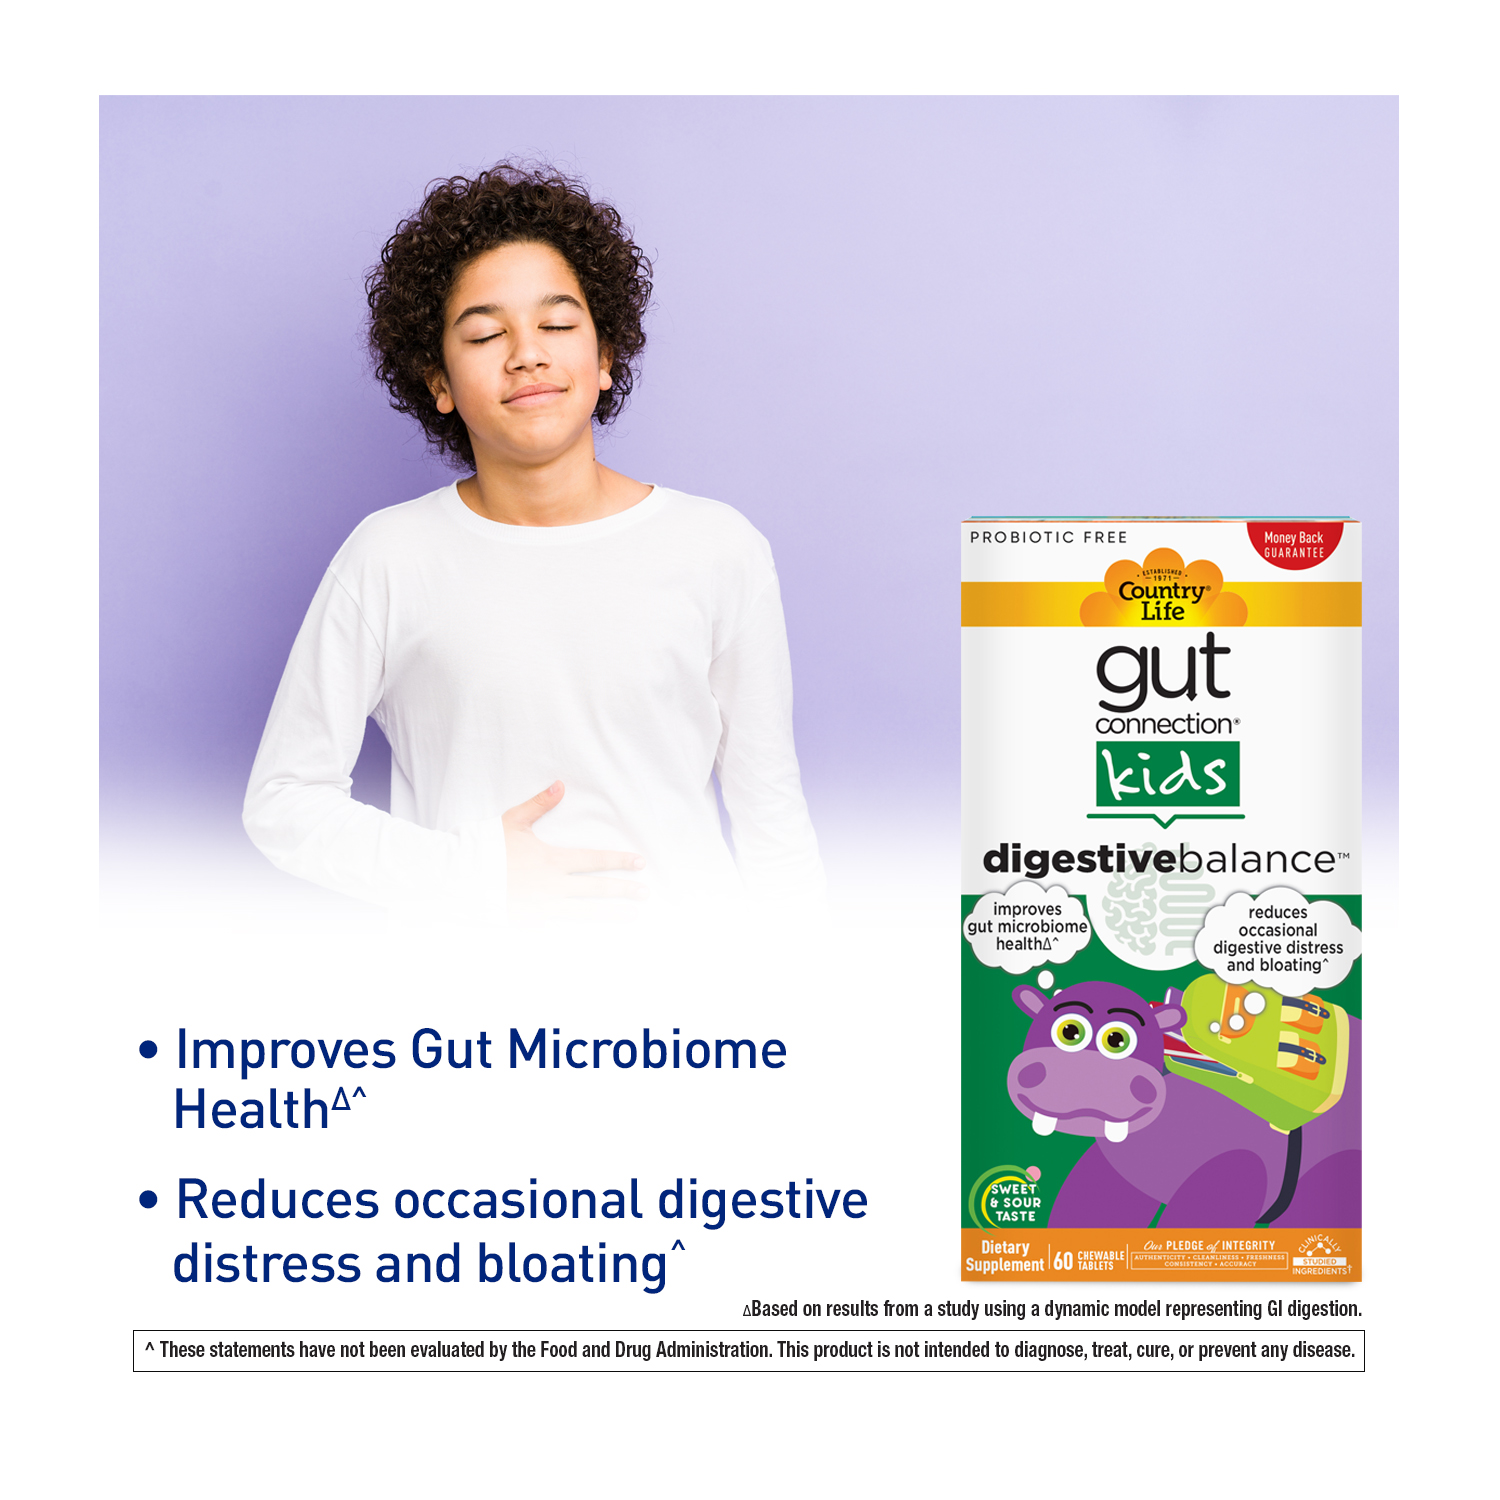 Gut Connection® Kids Digestive Balance™